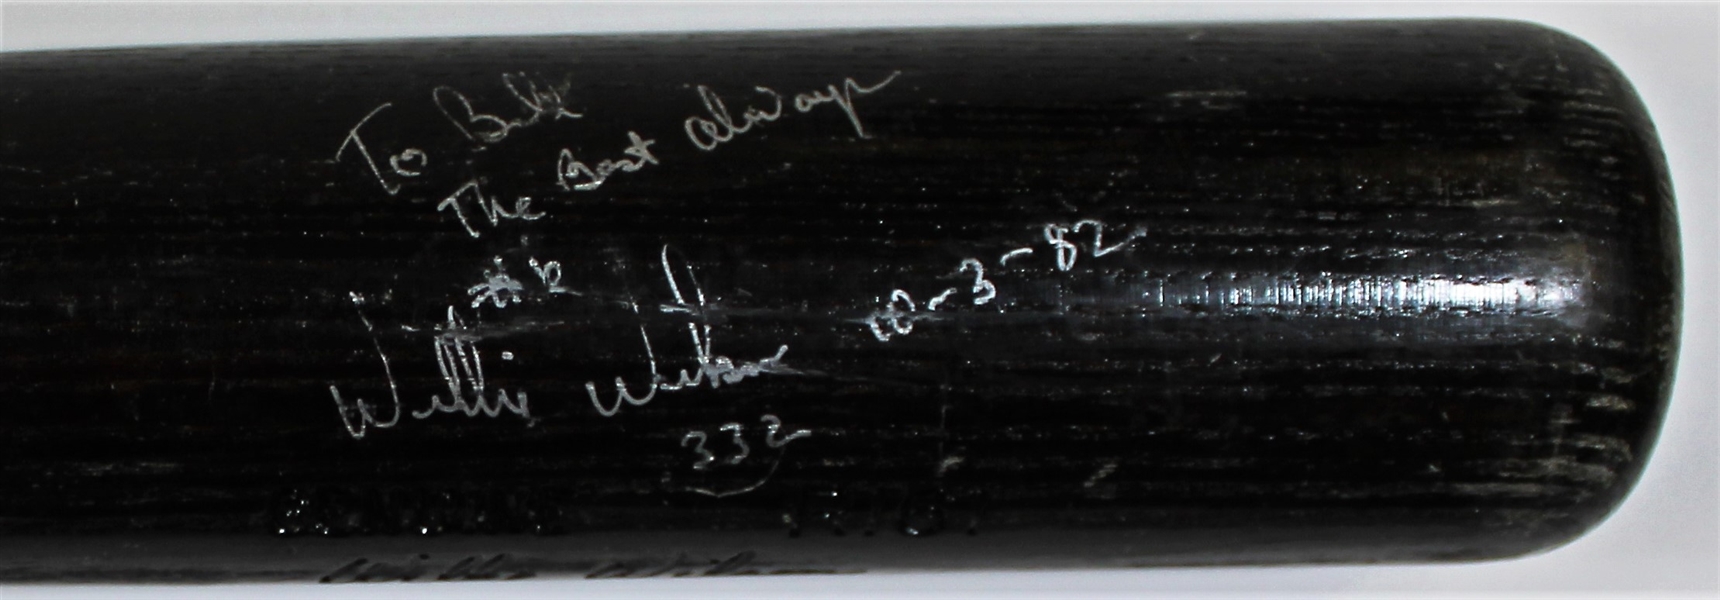 1980-83 Willie Wilson Game Used & Signed Bat - PSA